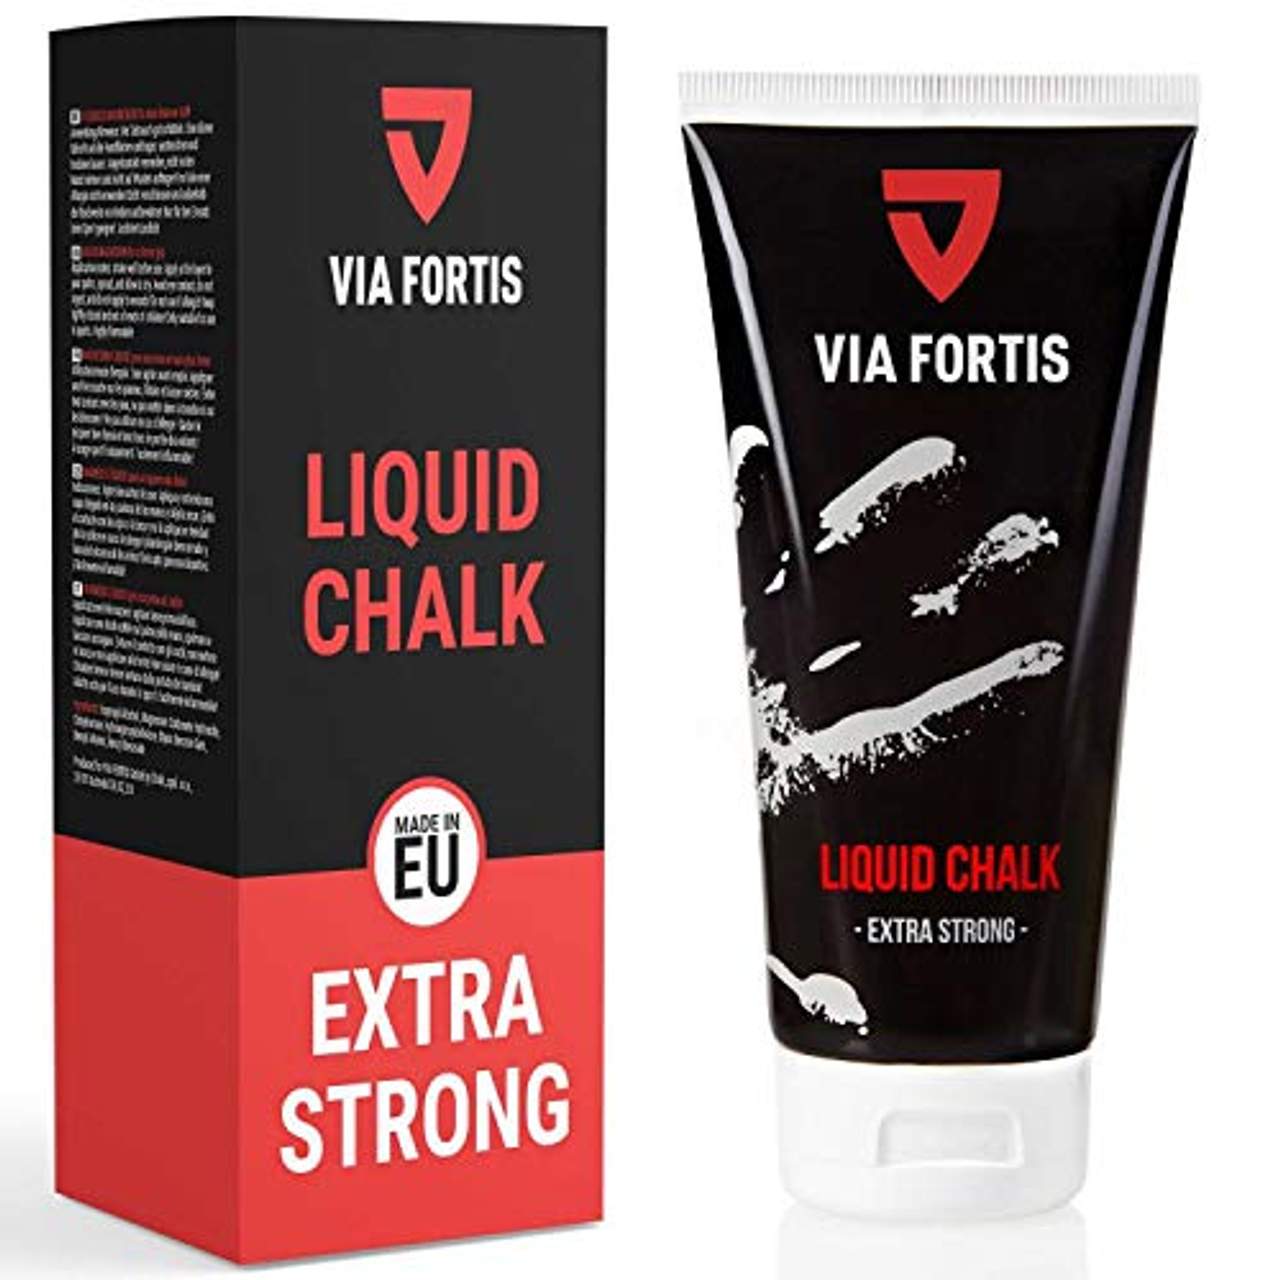 VIA FORTIS Liquid Chalk